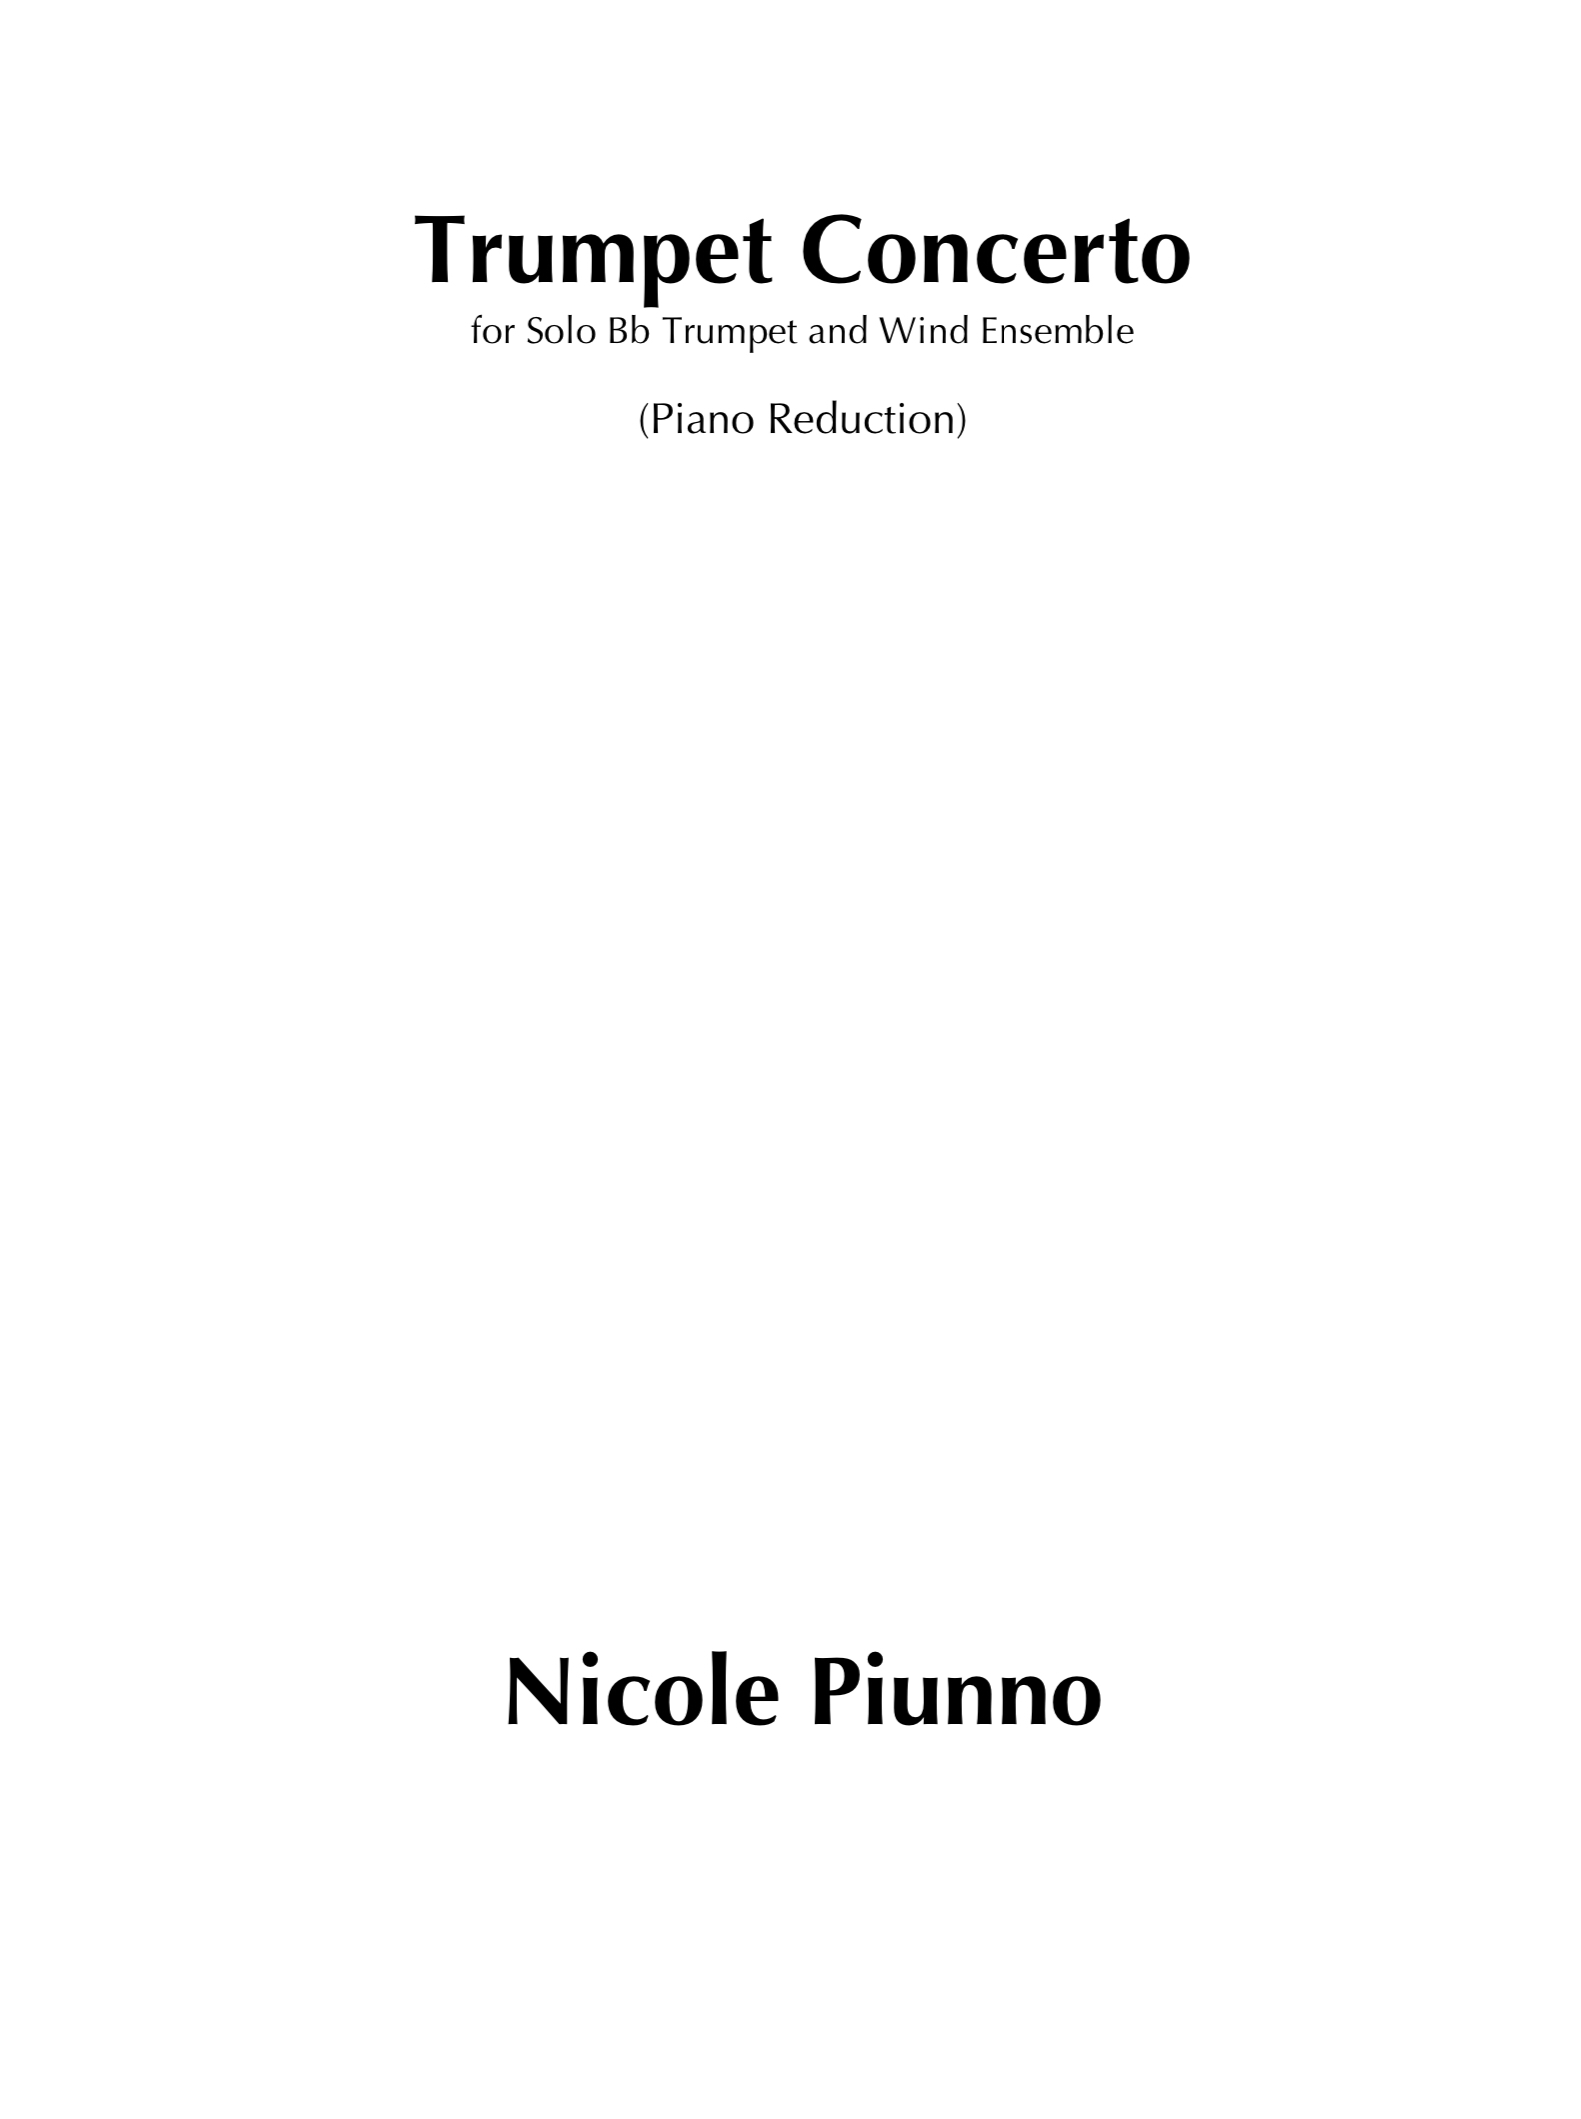 Trumpet Concerto-Piano Reduction by Nicole Piunno